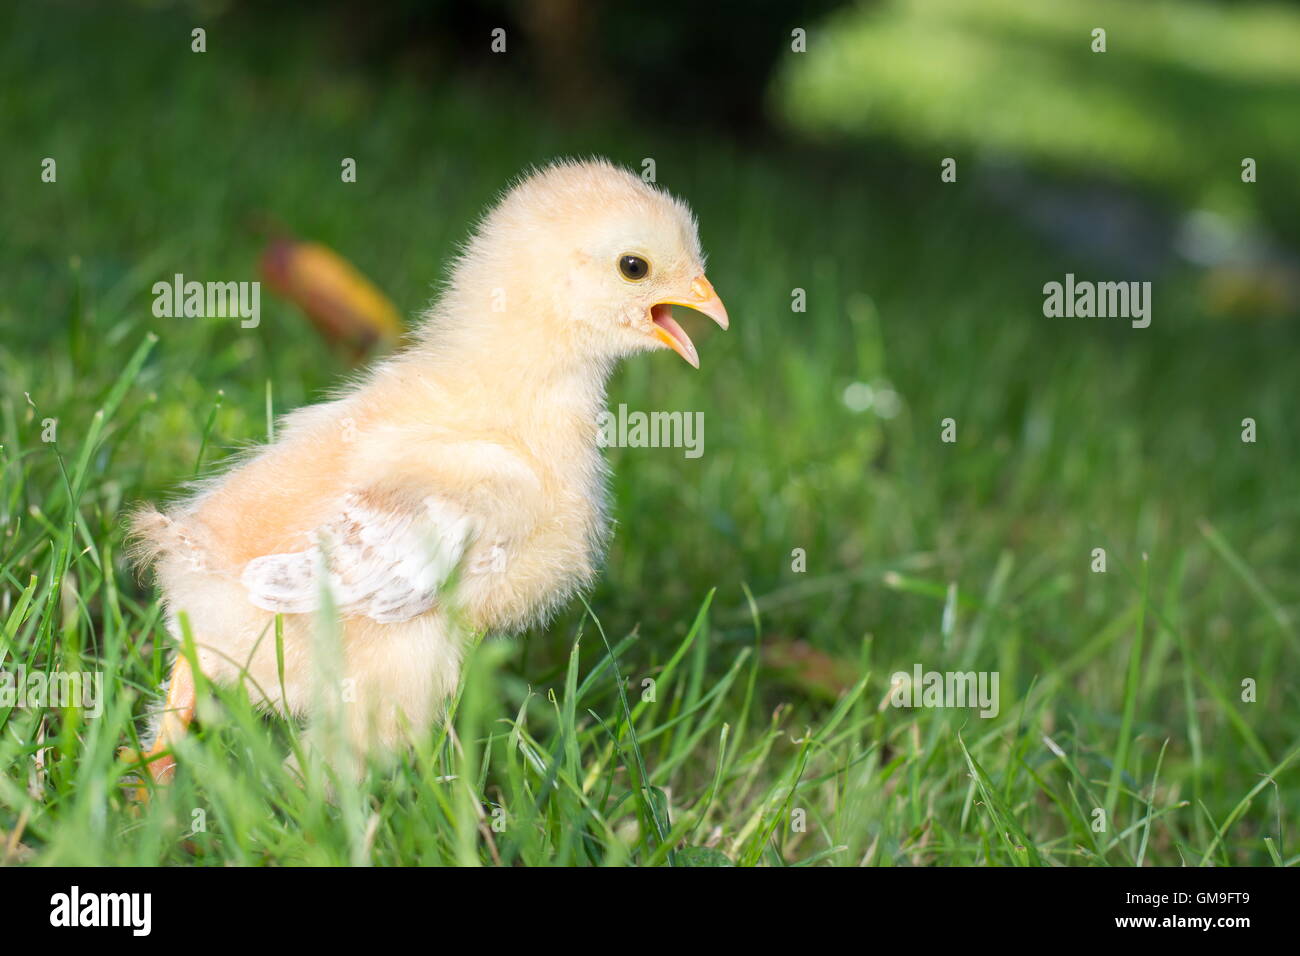 Baby chicken walking on green grass Stock Photo